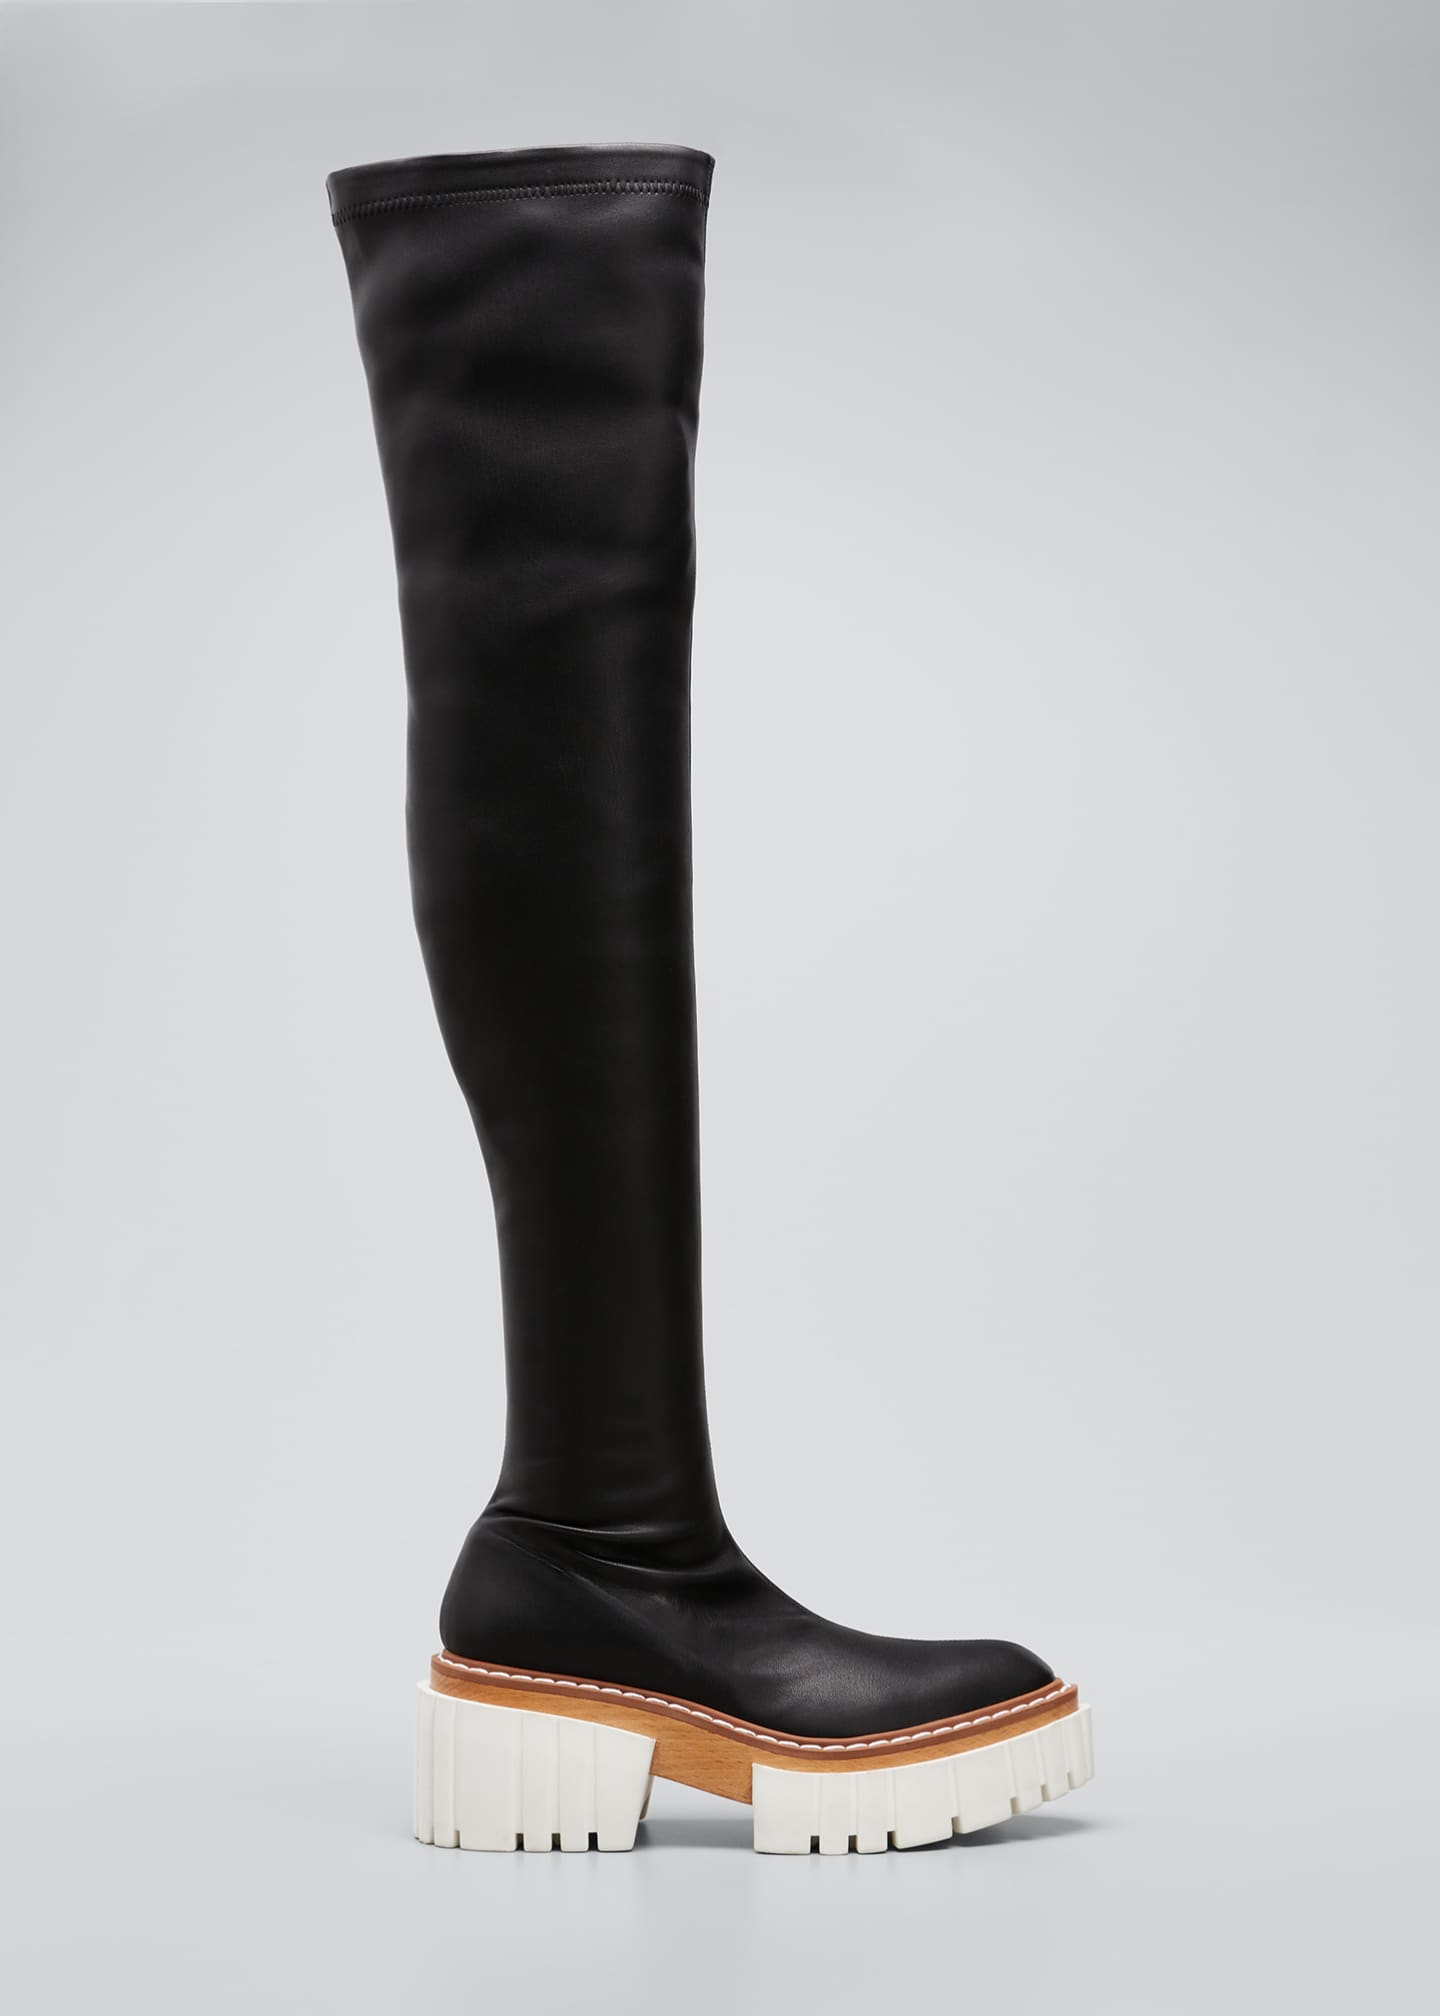 Stella McCartney Emilie Thigh-High Platform Boots - Bergdorf Goodman